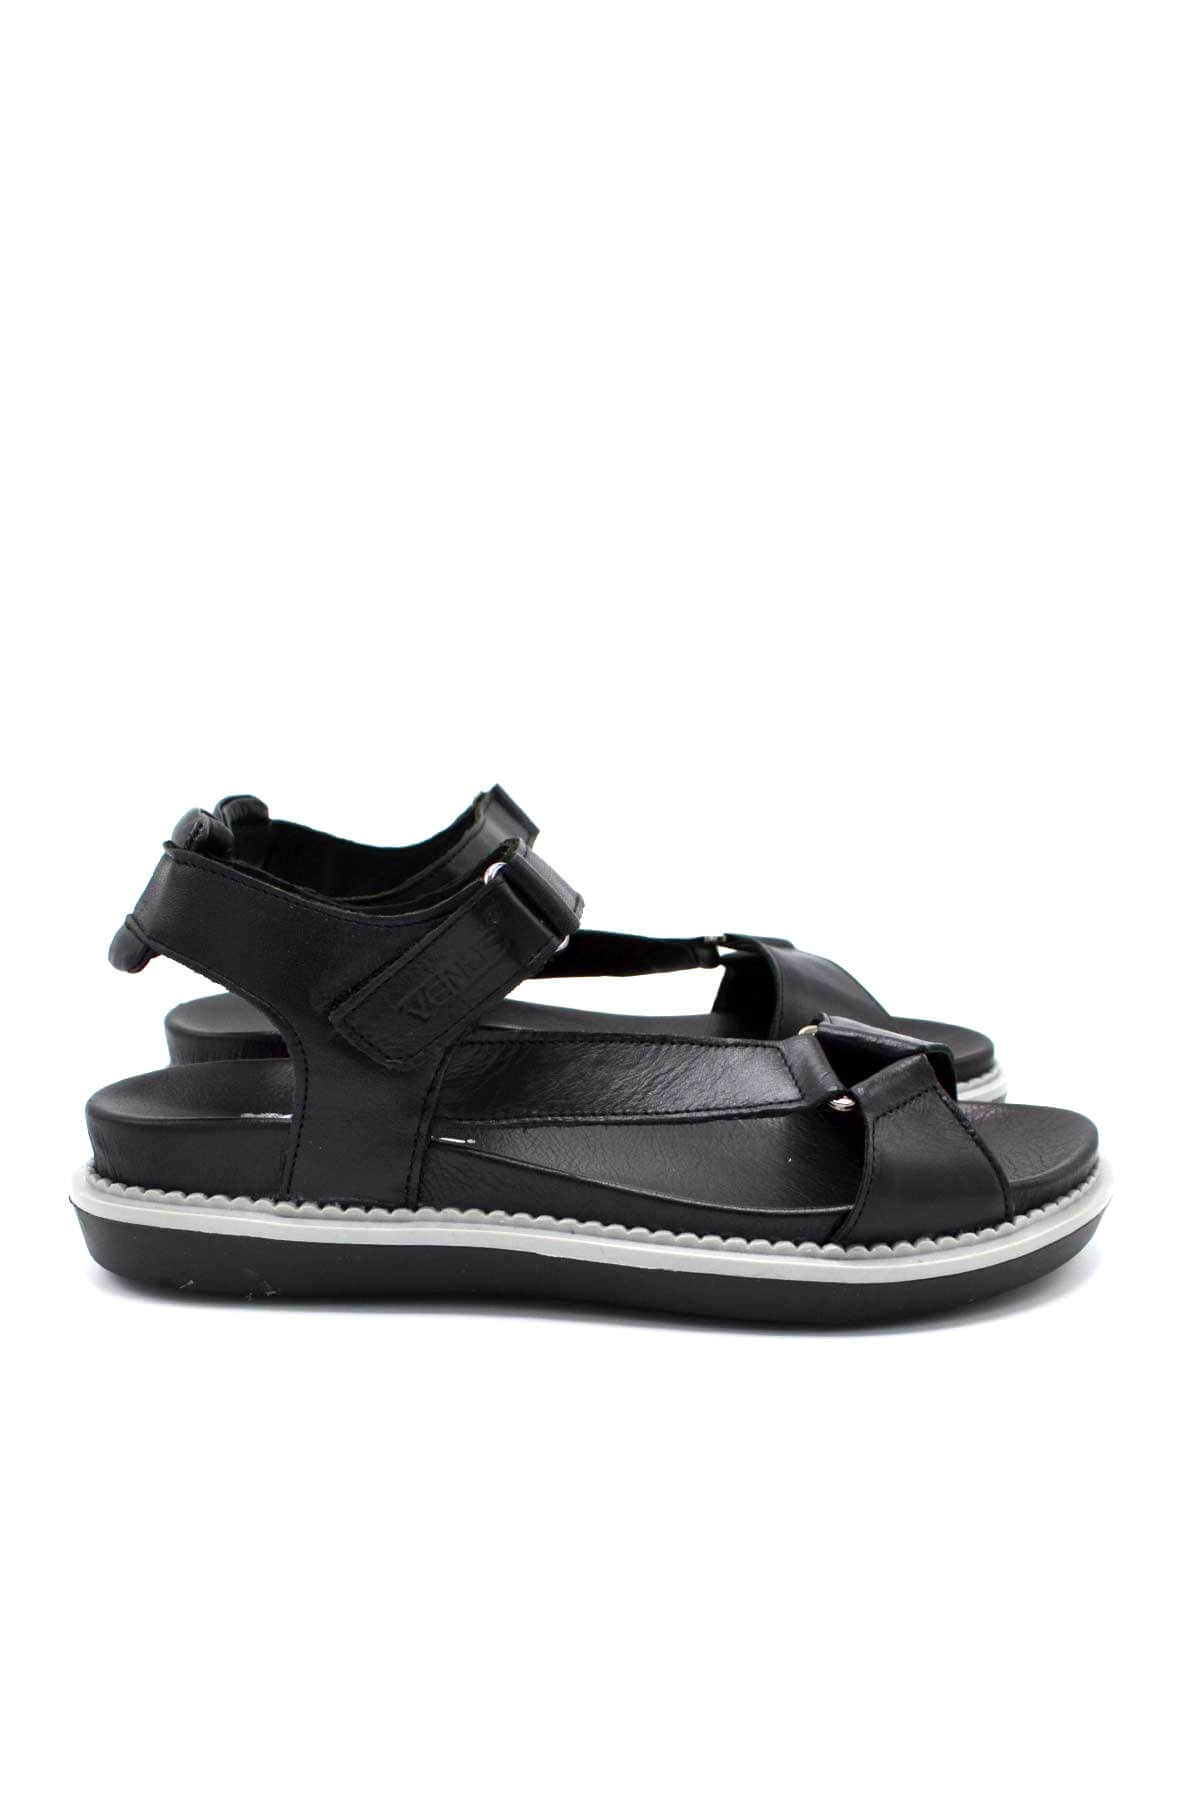 Kadın Comfort Deri Sandalet Siyah 202064Y - Thumbnail